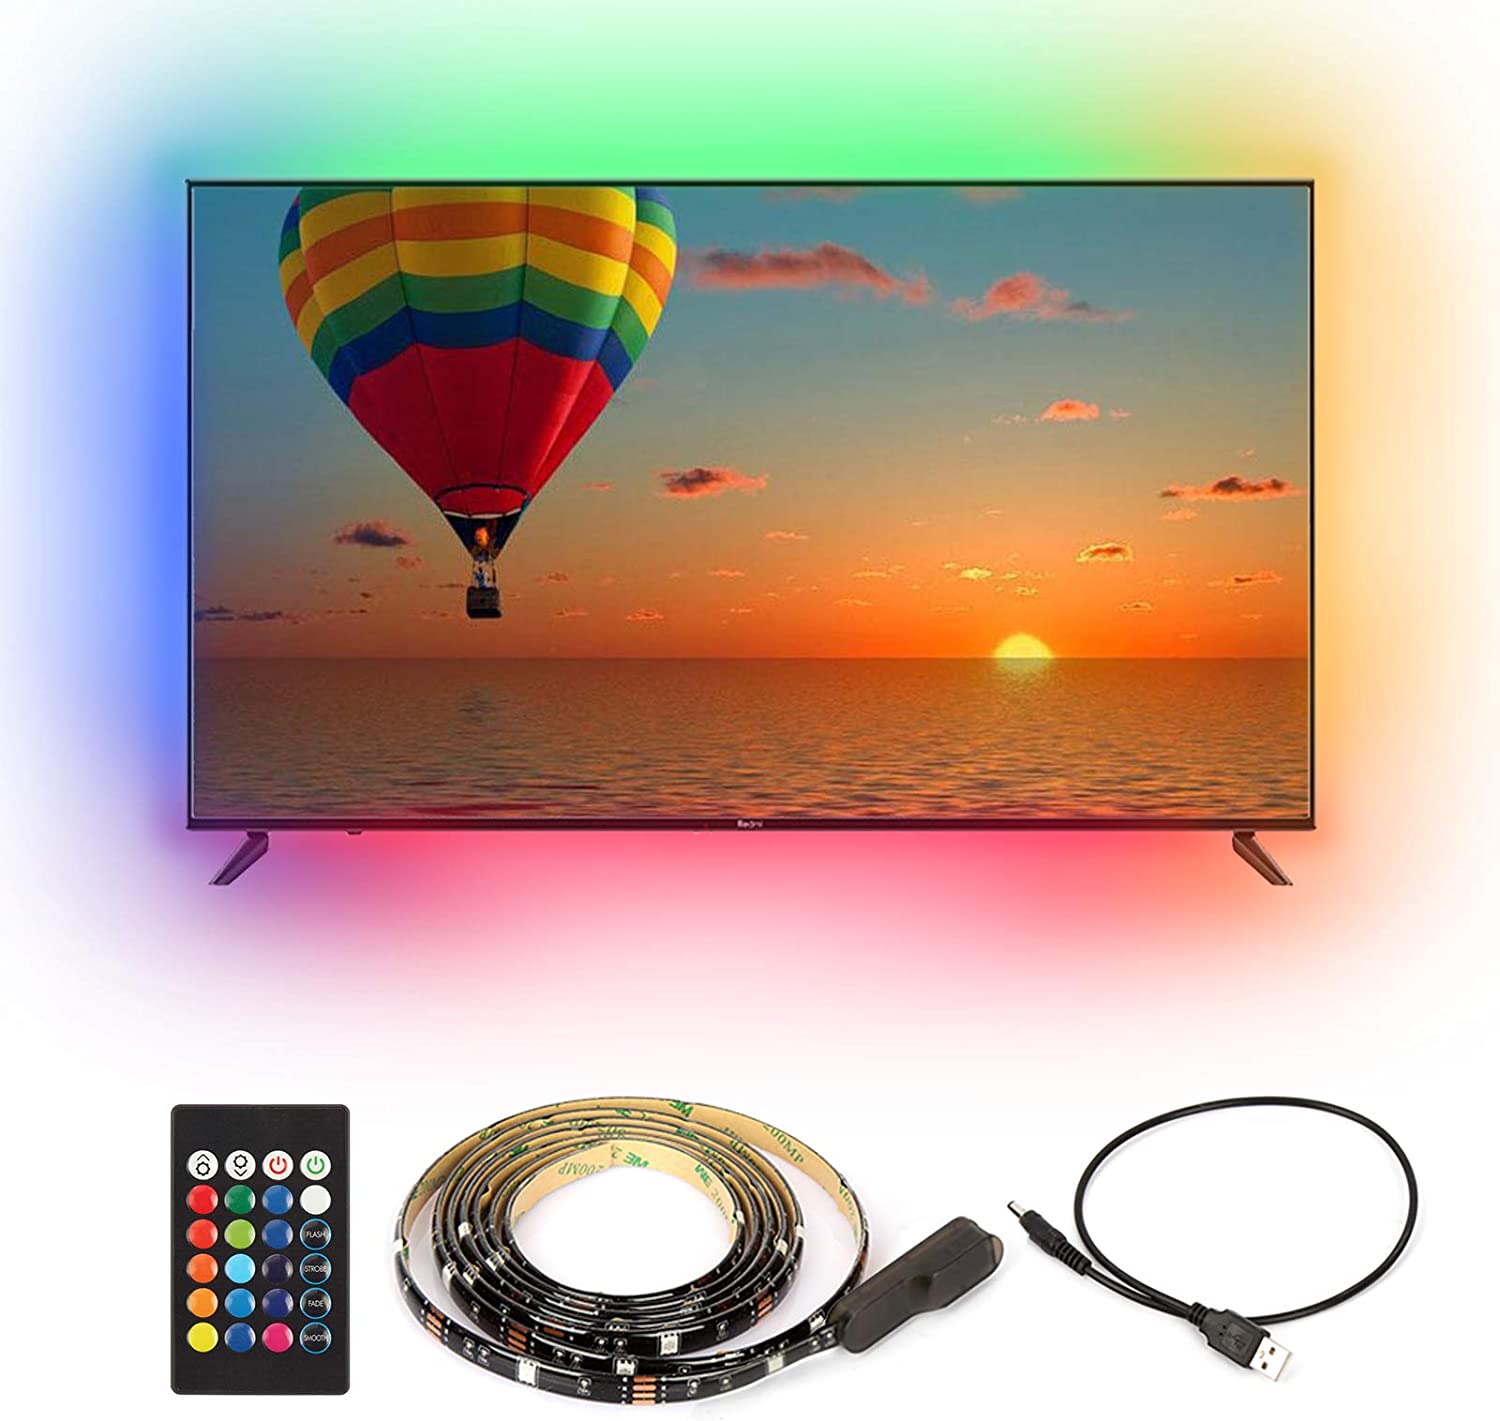 Dazone LEDテープライト テレビ PC照明 USB式 TVバックライト リモコン付き SMD5050RGB LEDテープ 防水 切断可能 フットランプ 足下照明 間接照明 装飾用 2M